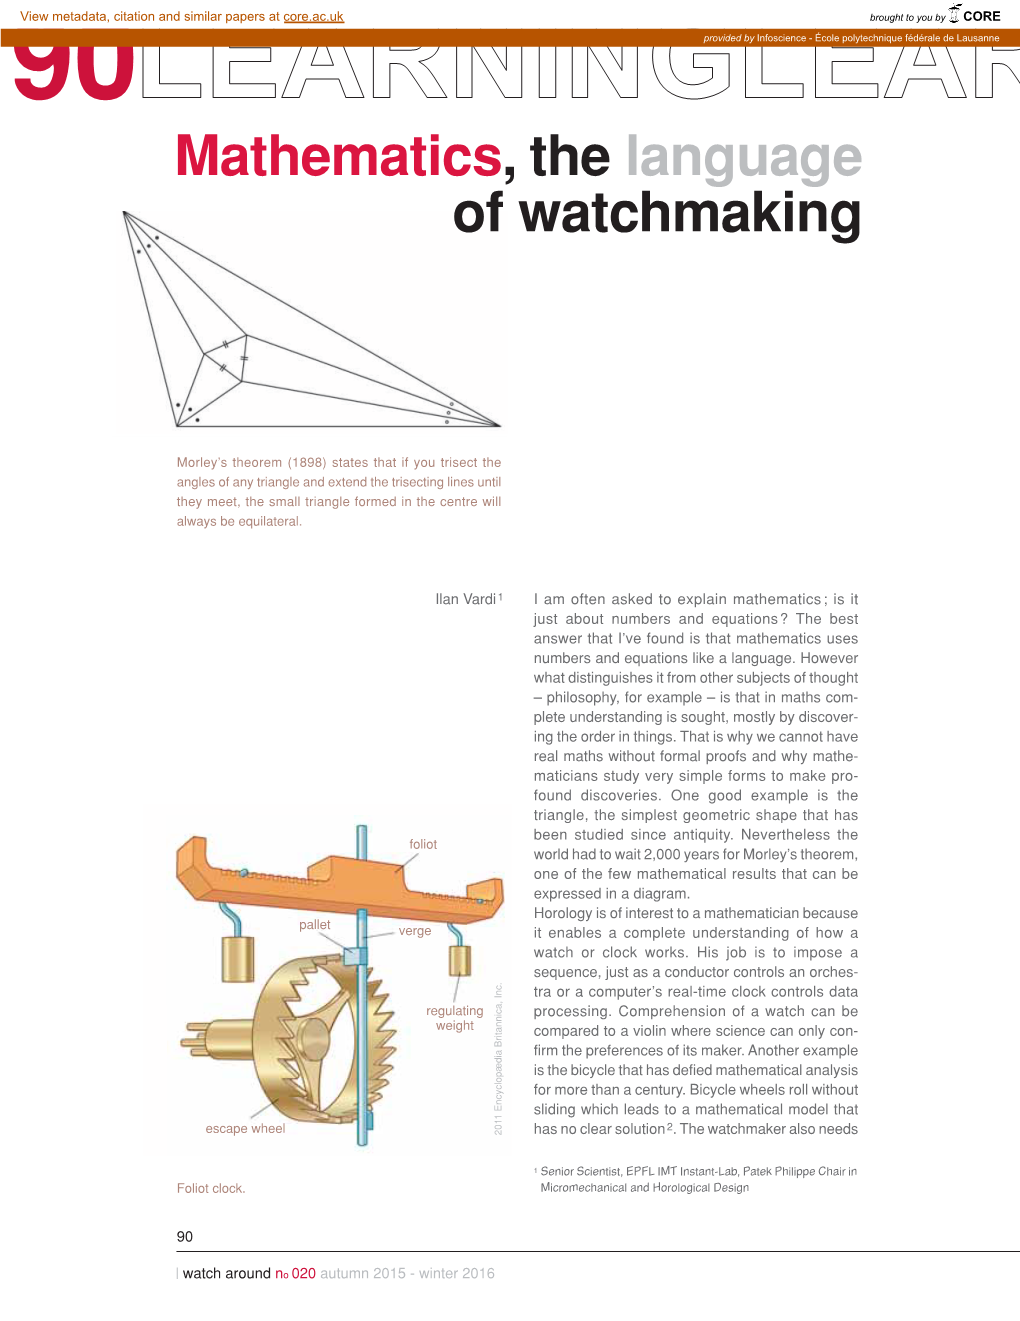 Mathematics, the Language of Watchmaking